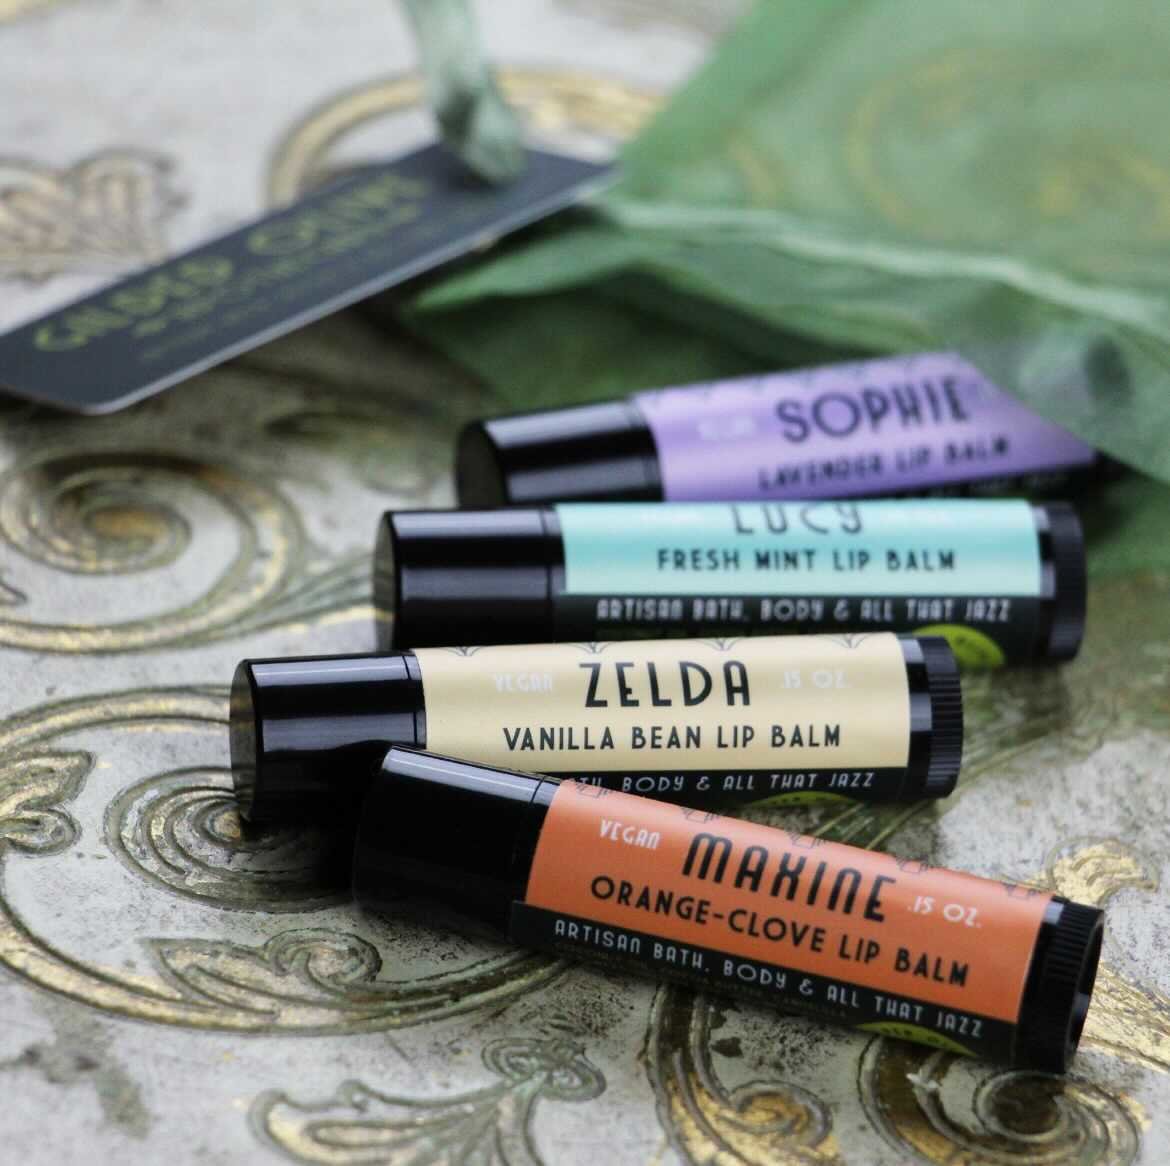 FOR HER ZELDA FITZGERALD SPIRIT
Gilded Olive Apothecary
https://www.gildedolive.com/
Pickup available in Medford
$19, vegan lip balm kit, Flapper collection